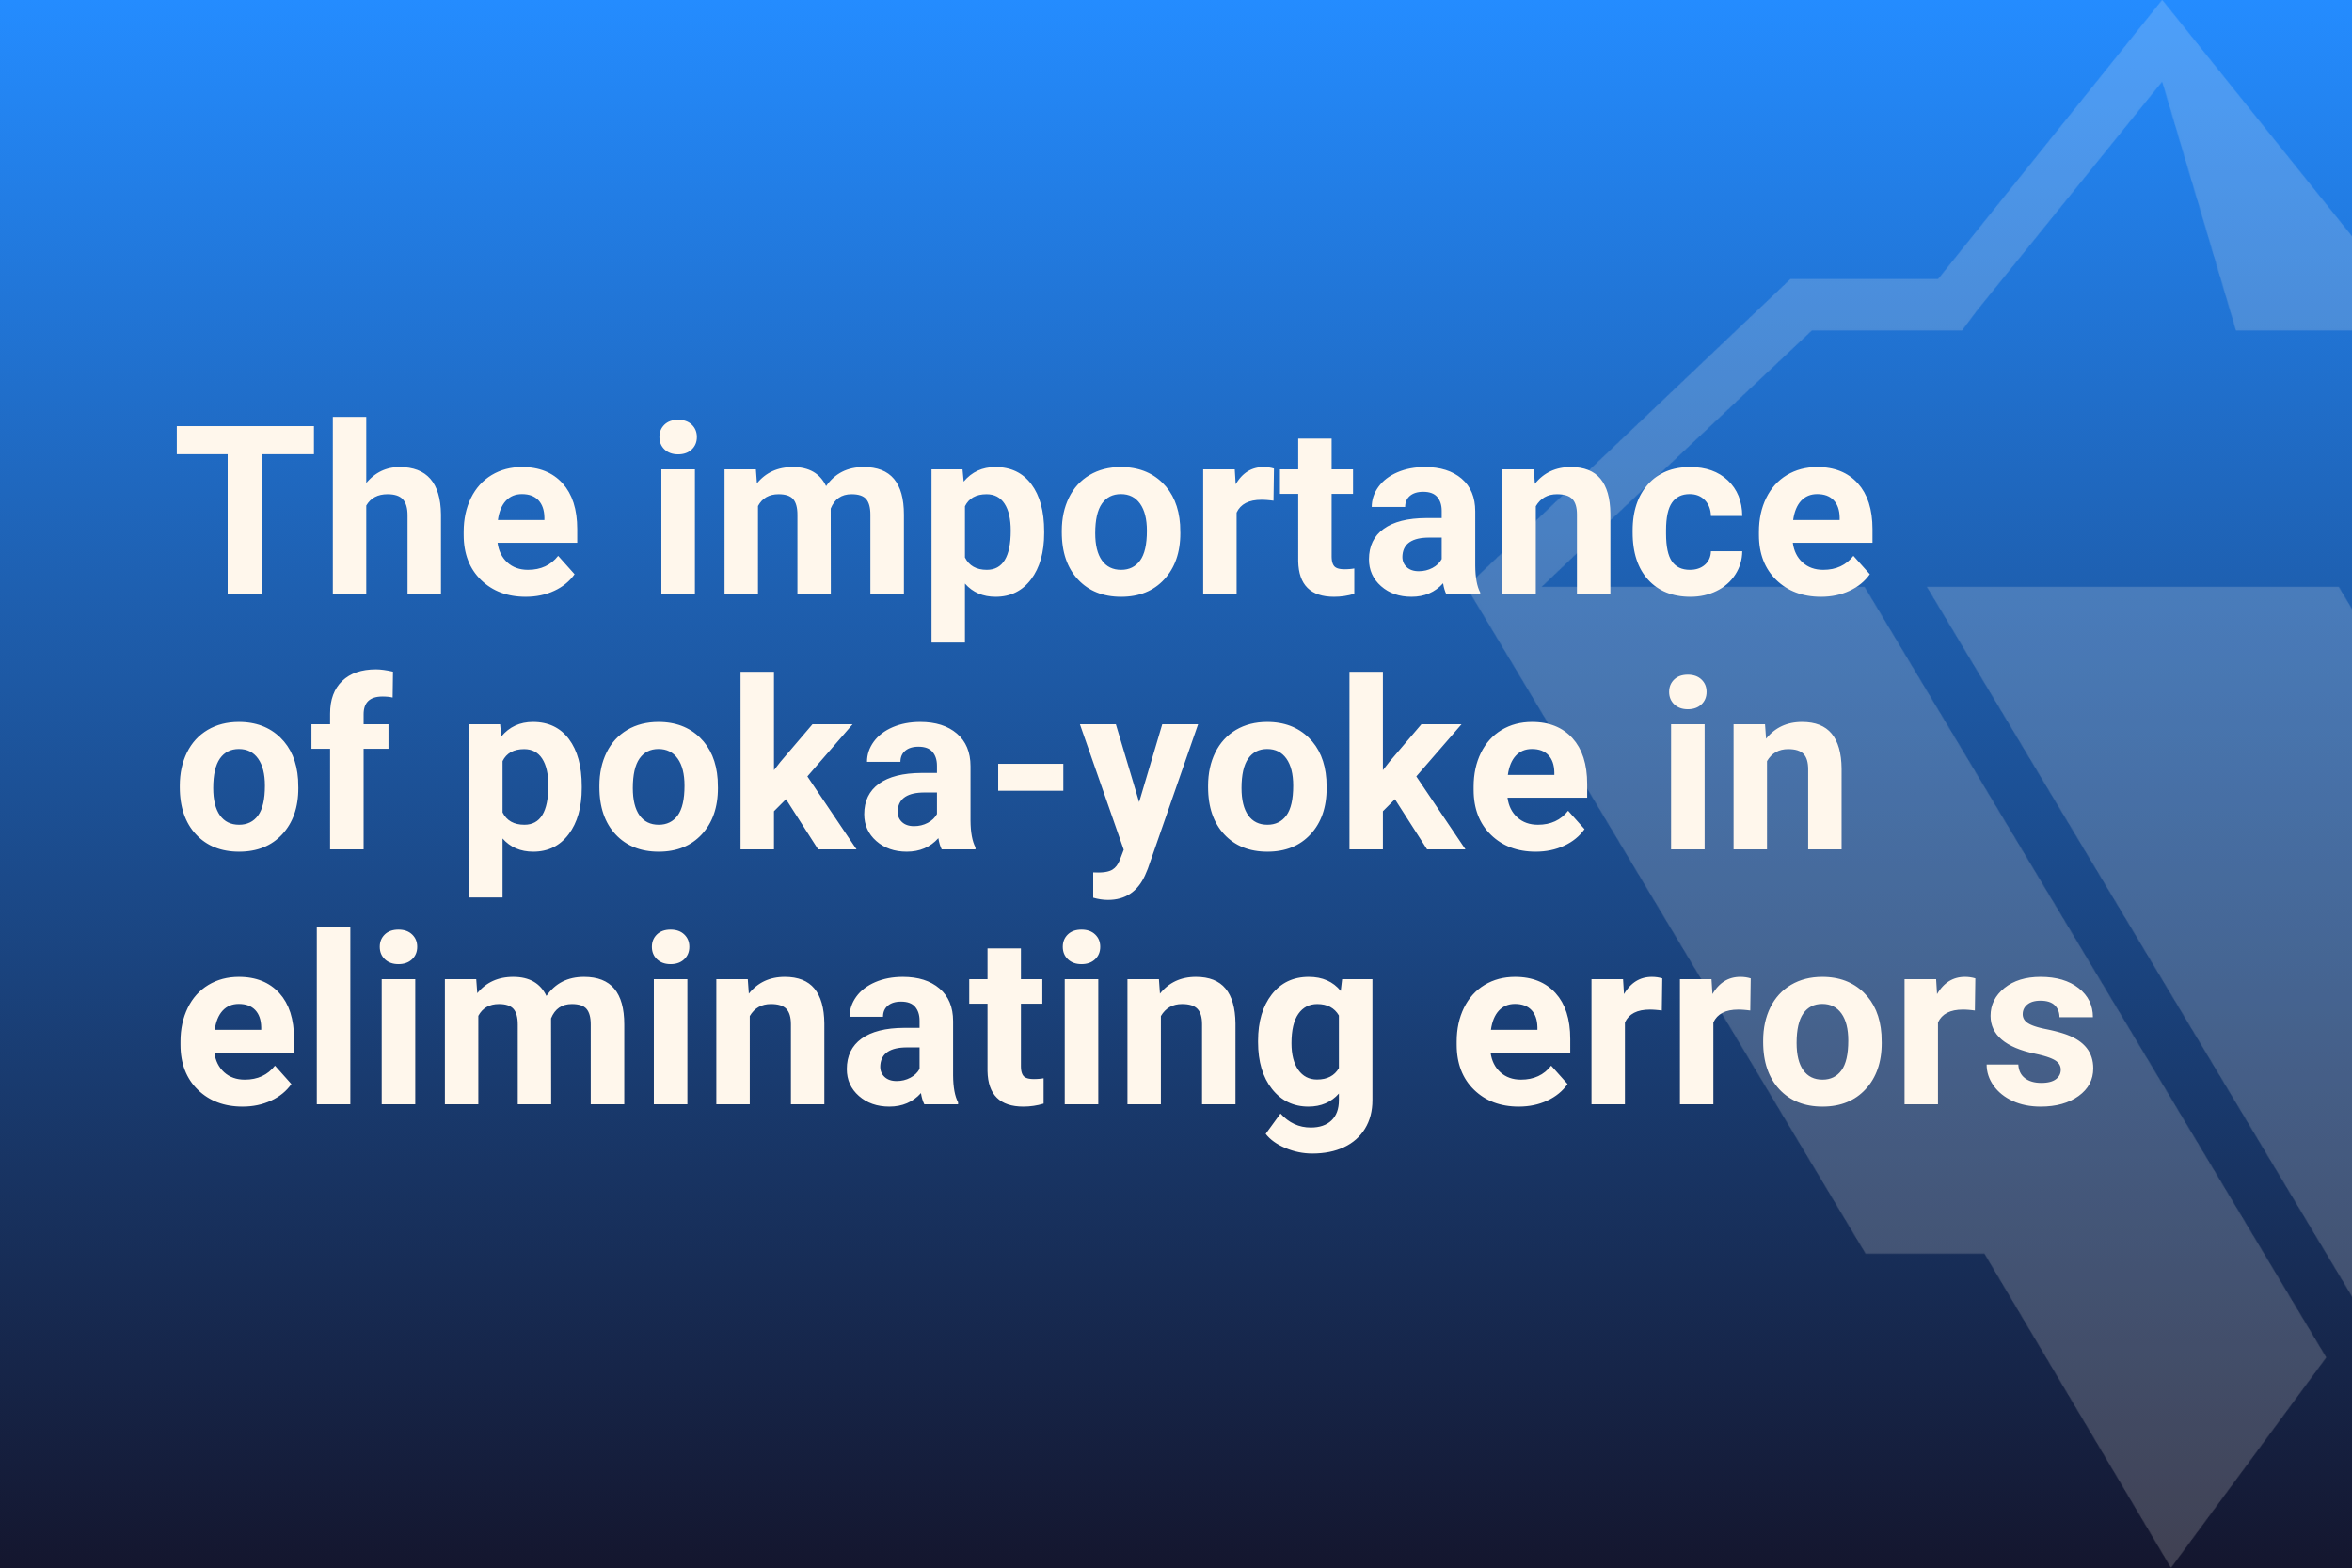 The importance of poka-yoke in eliminating human errors